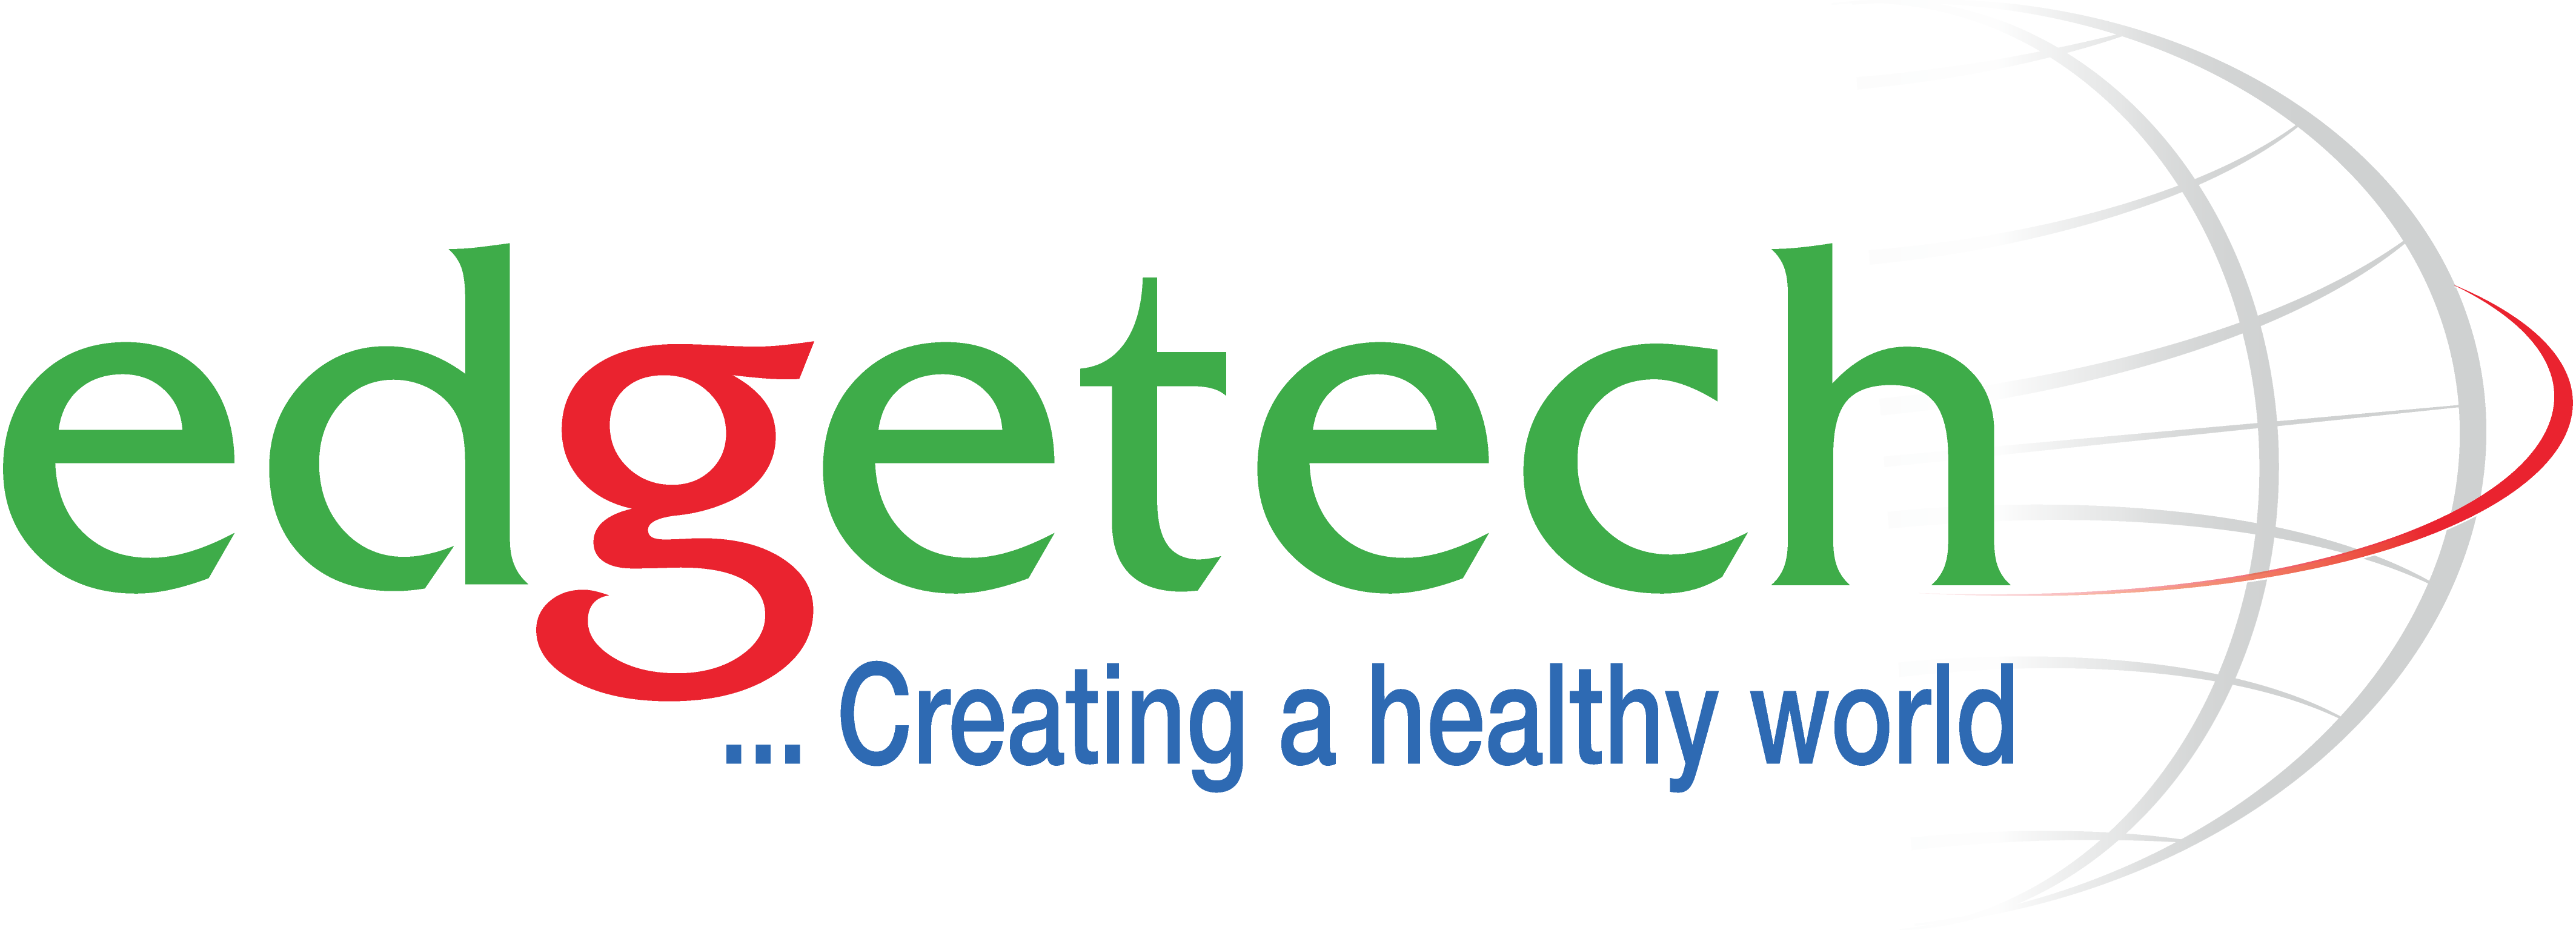 edgetech logos